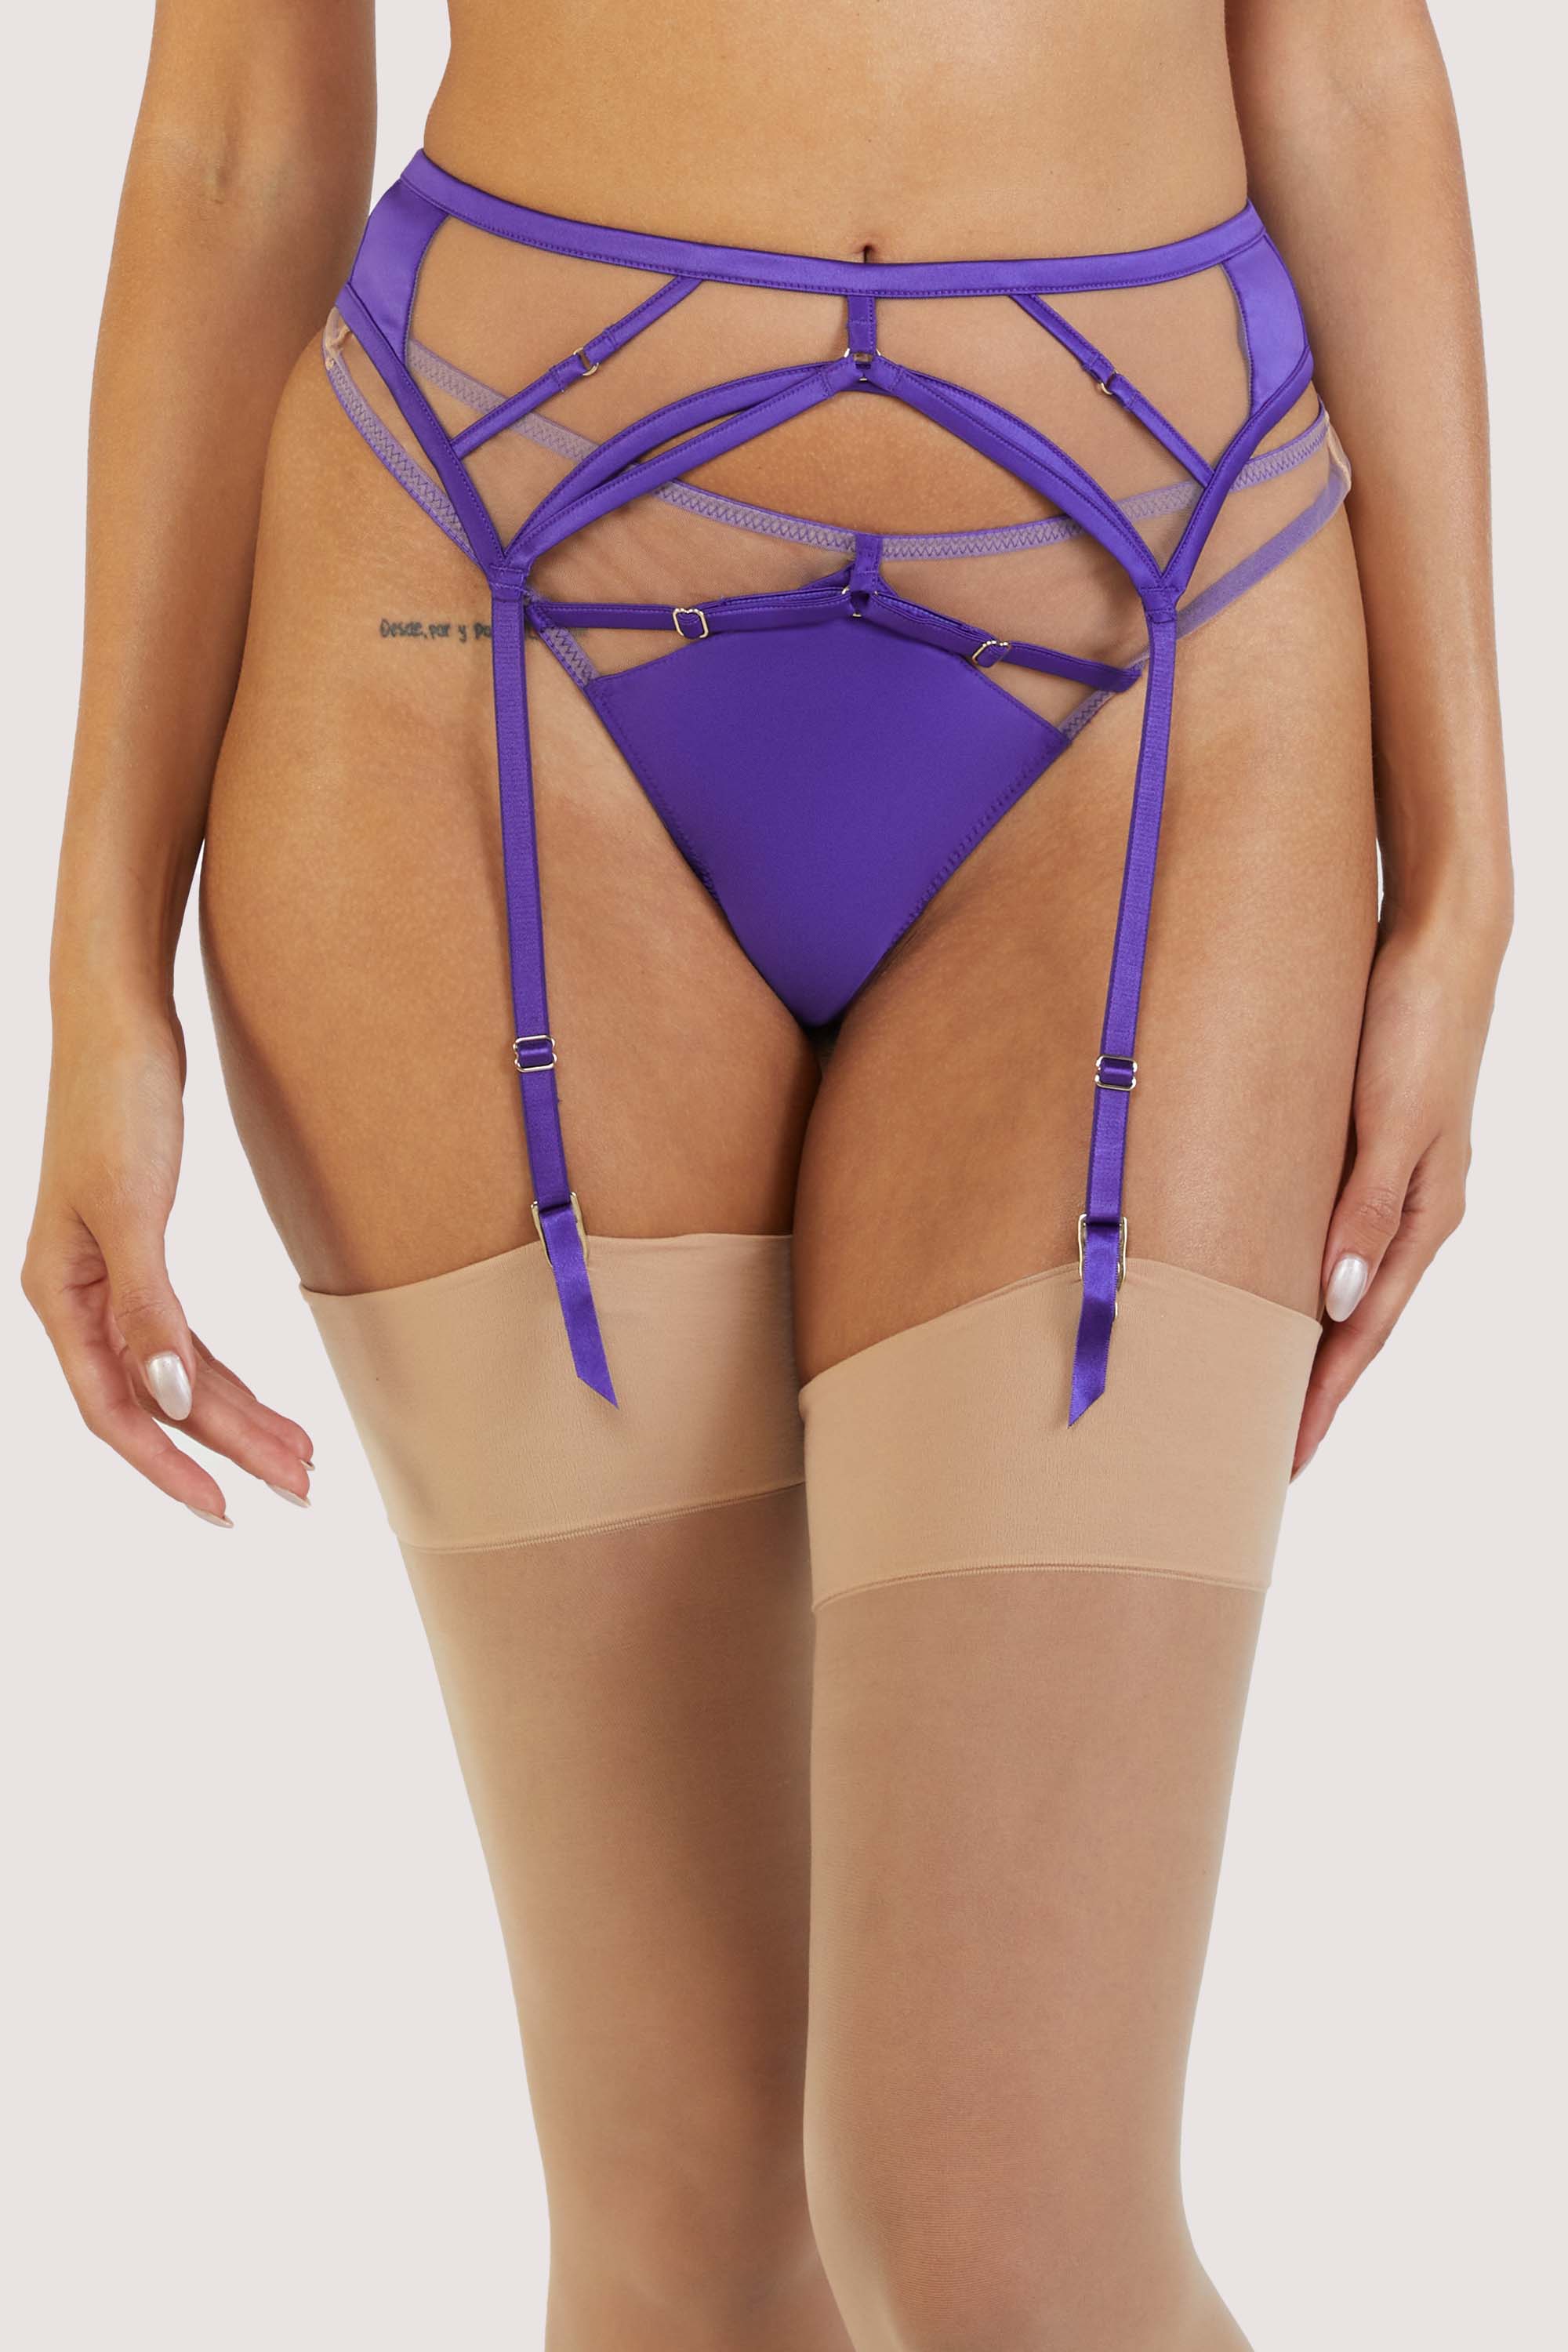 Ramona Purple Strap Detail Illusion Mesh Suspender 18